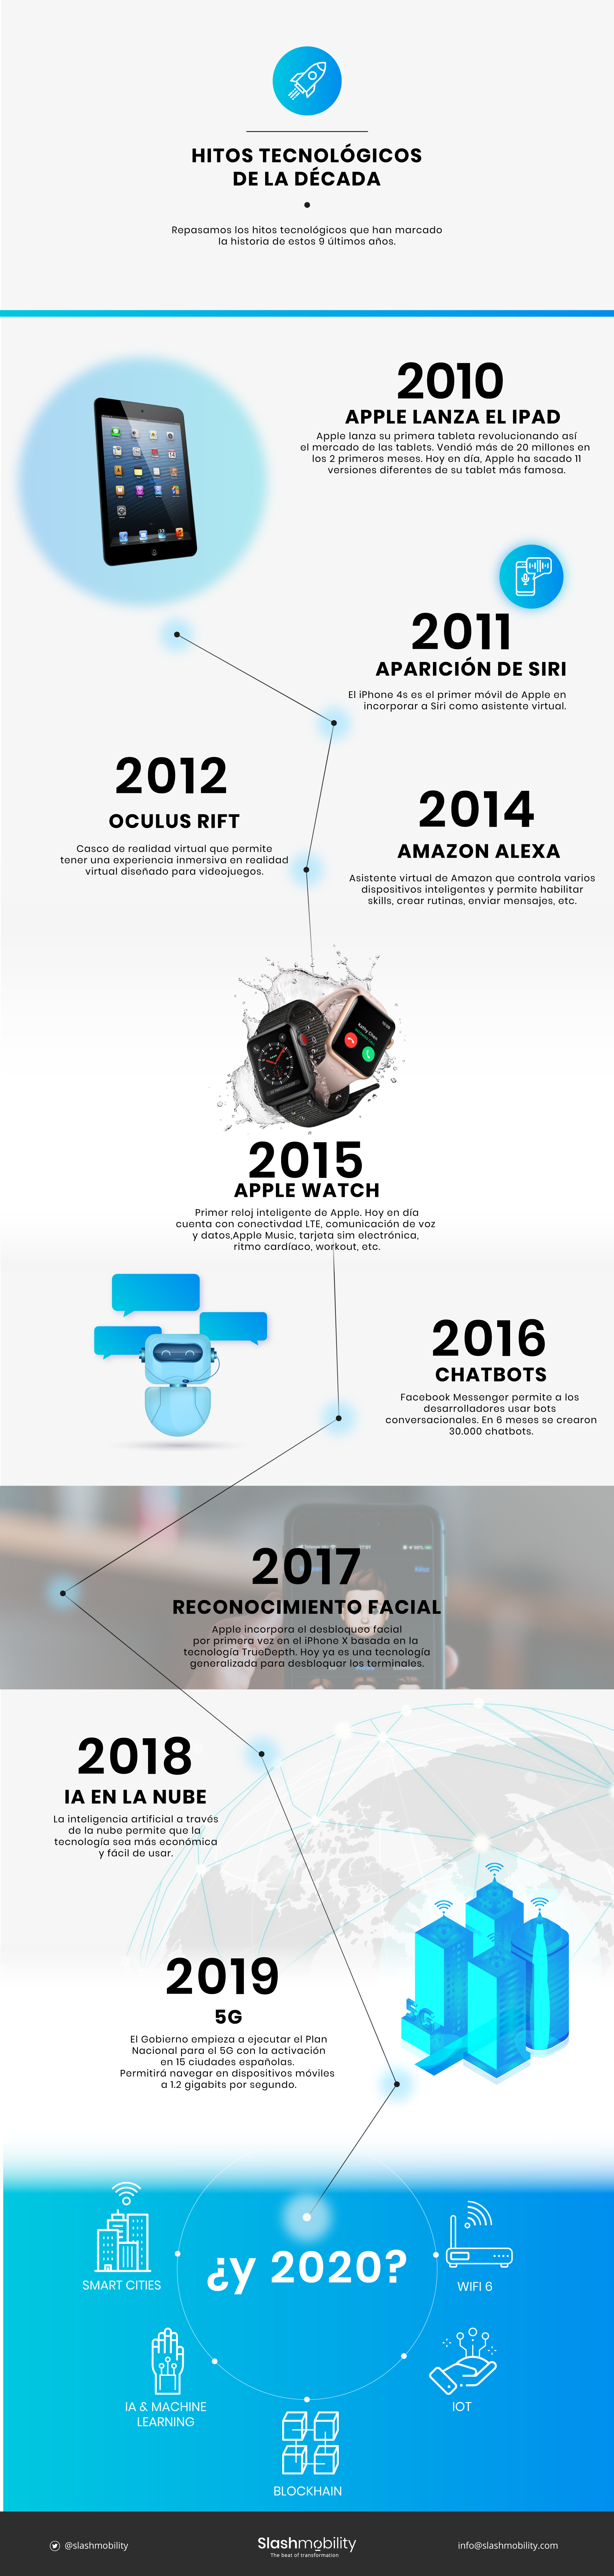 Hitos tecnológicos 2010-2019 #infografia #infographic #tech